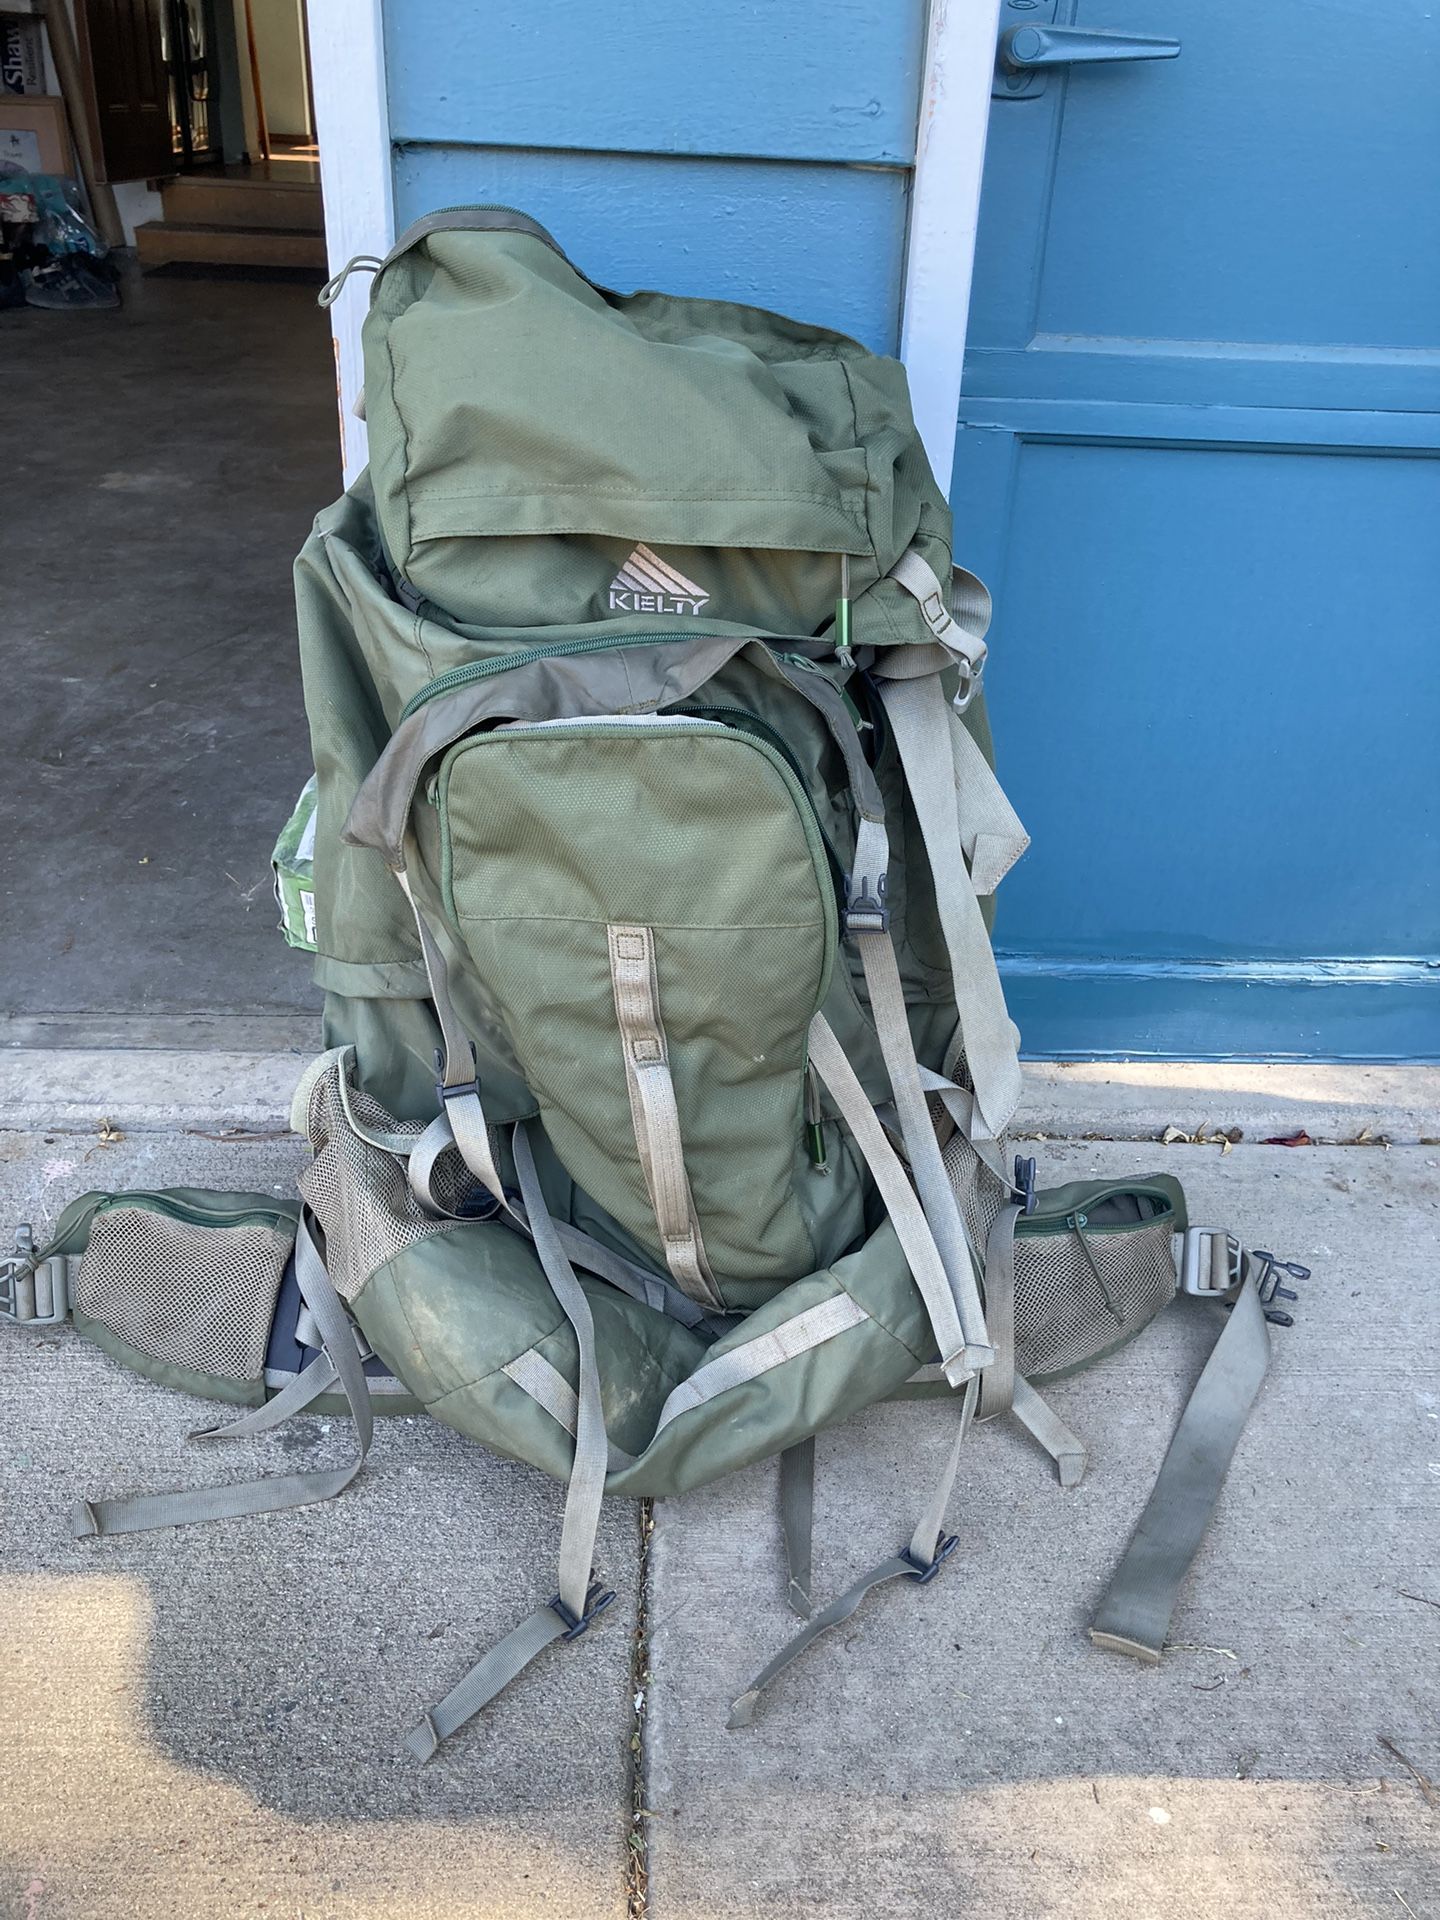 Kelty Backpack 80 L - $20 or 12pk Rainier